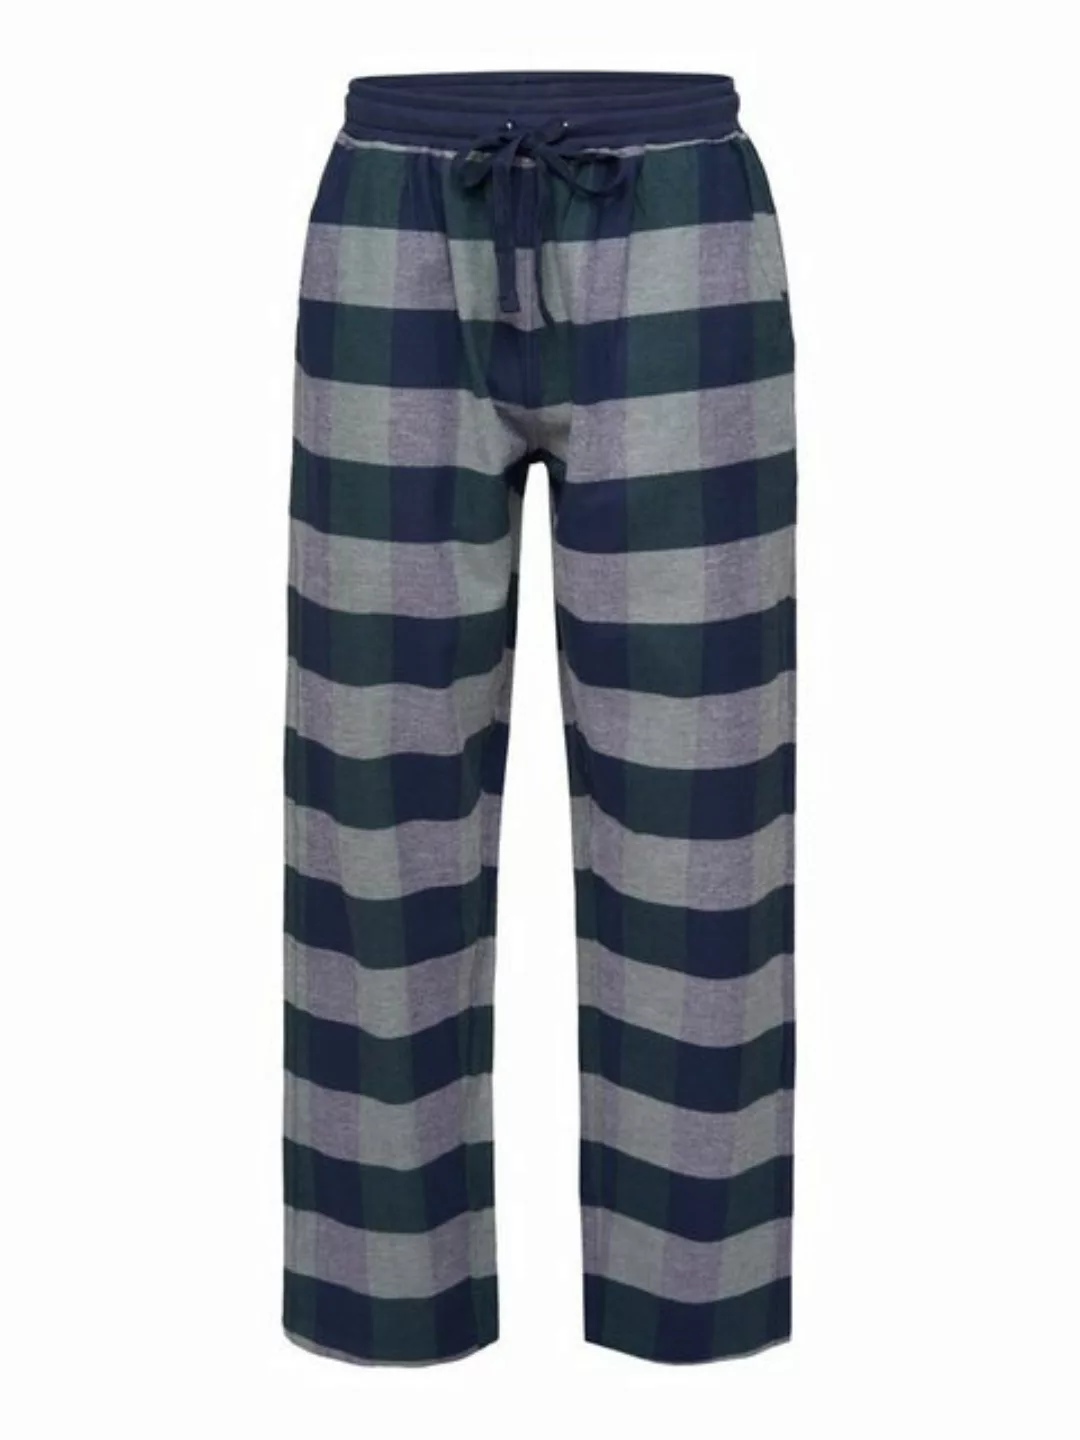 Phil & Co. Pyjamahose Flanell Cozy Warm Loungewear günstig online kaufen